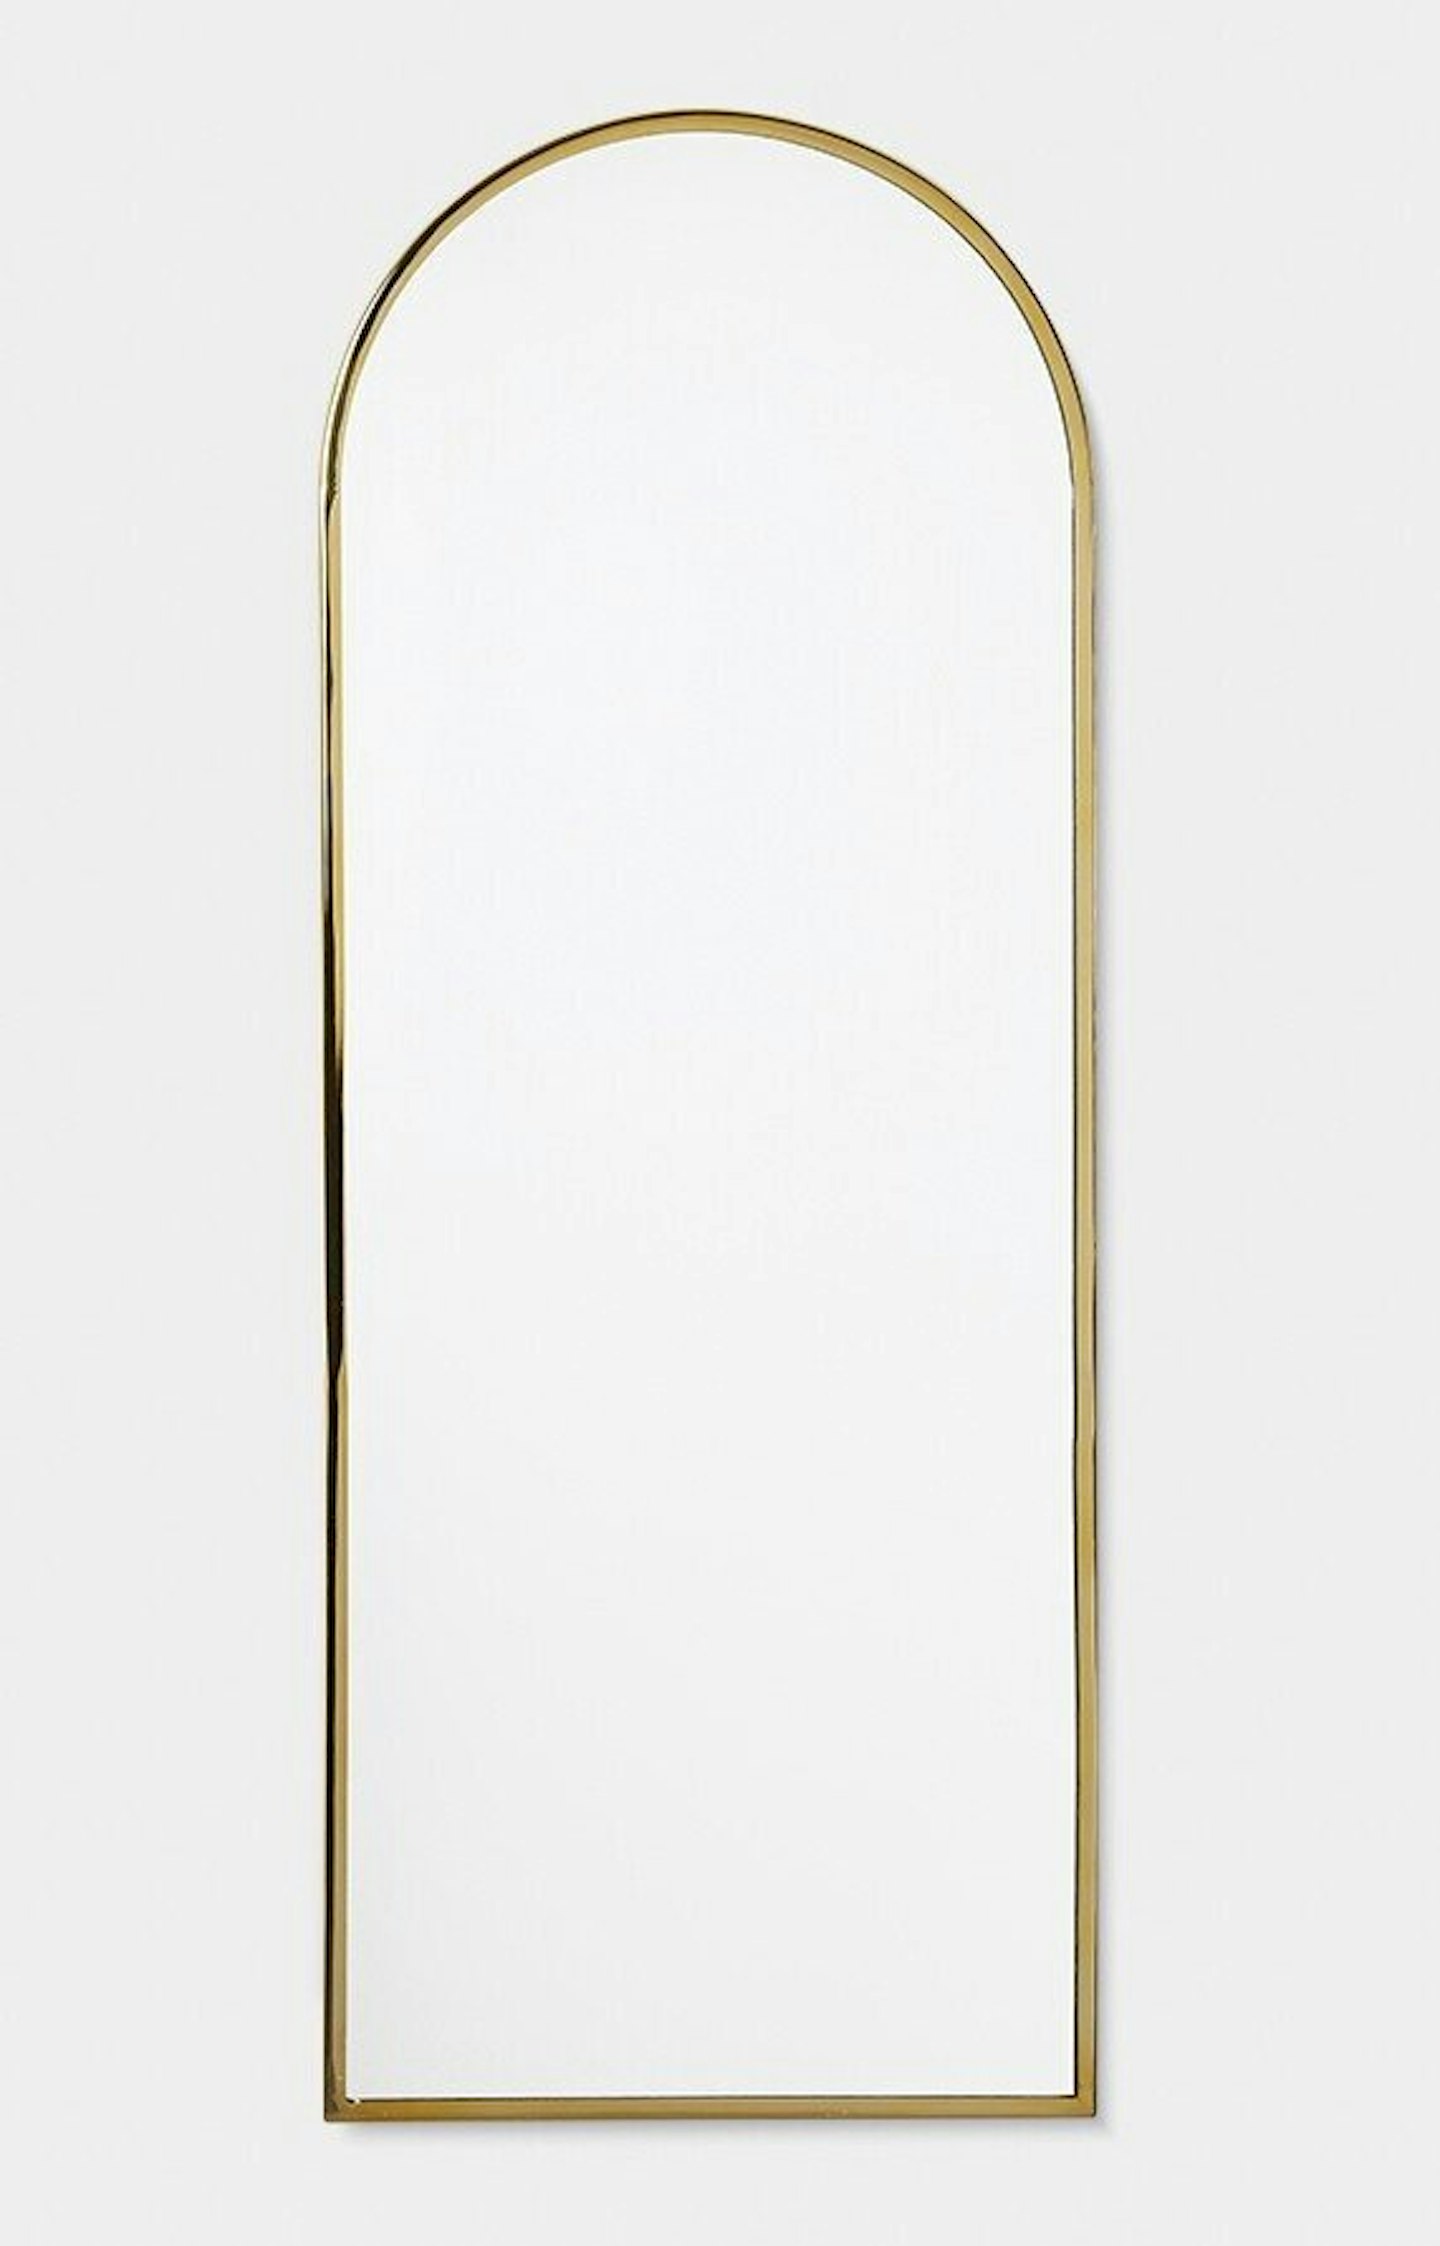 Oliver Bonas, Archway Gold Full Length Mirror, £250